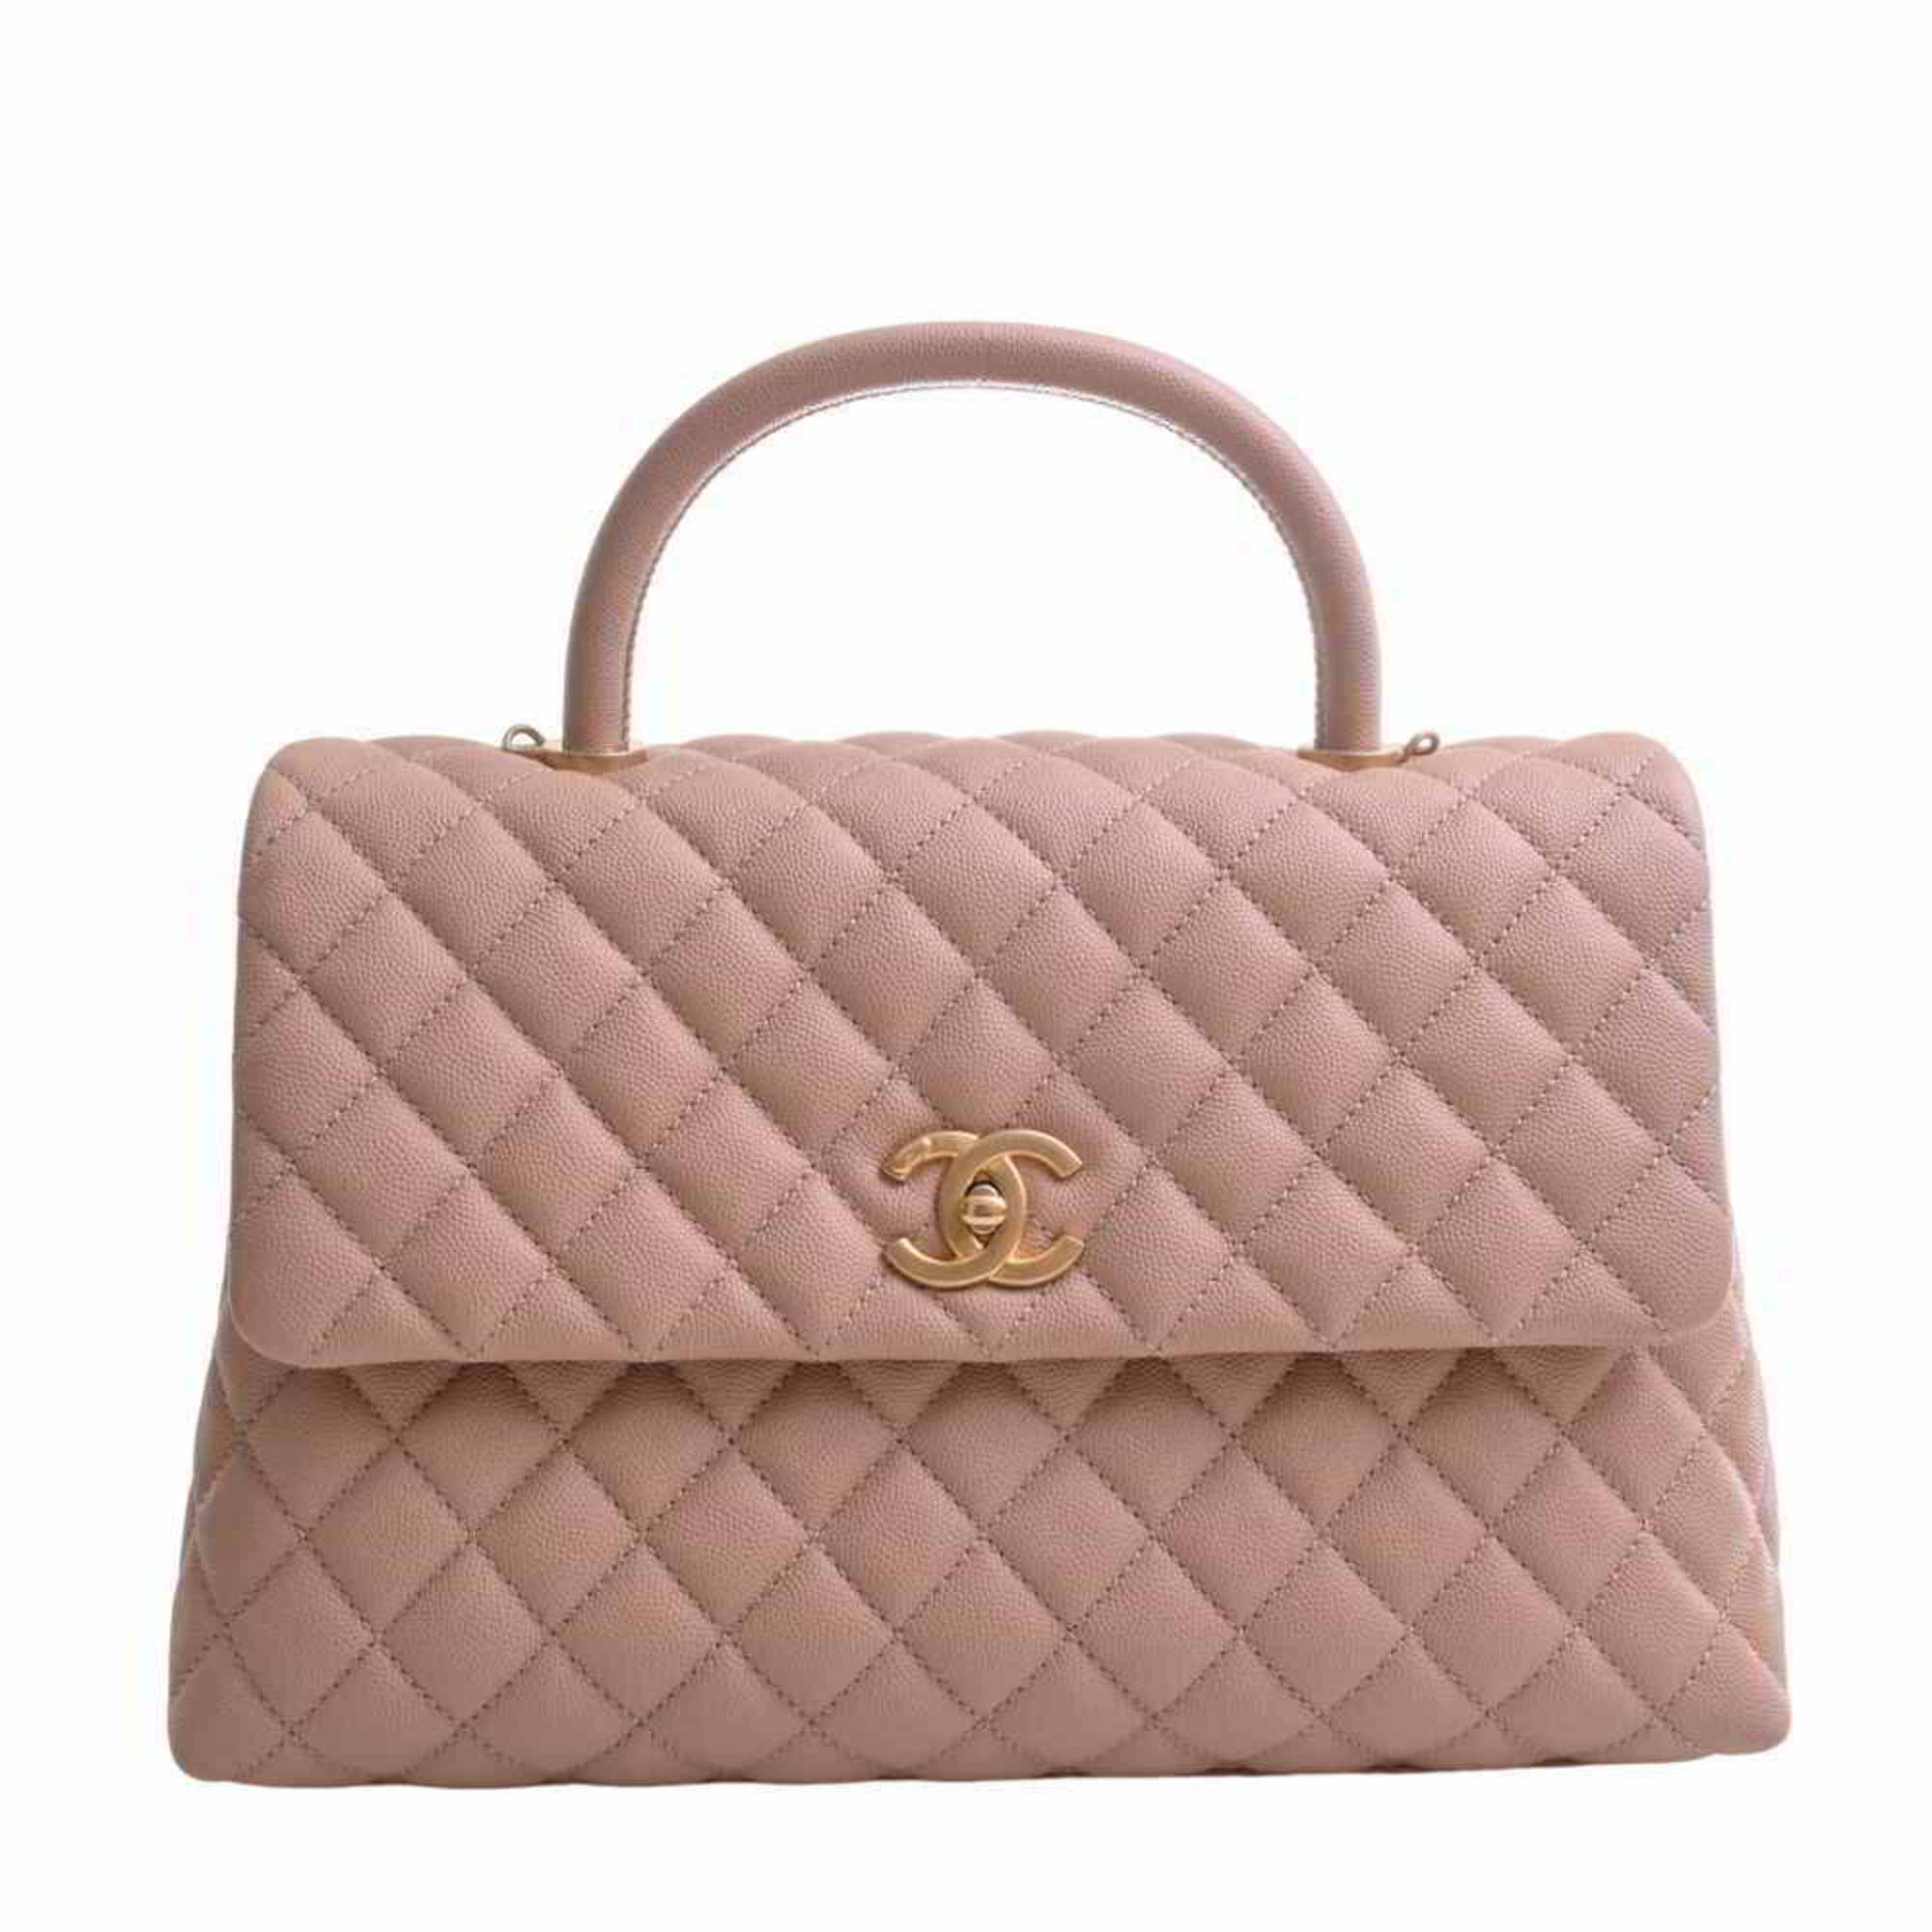 CHANEL Caviar Skin Matelasse Coco Handle Handbag A92992 Pink Beige